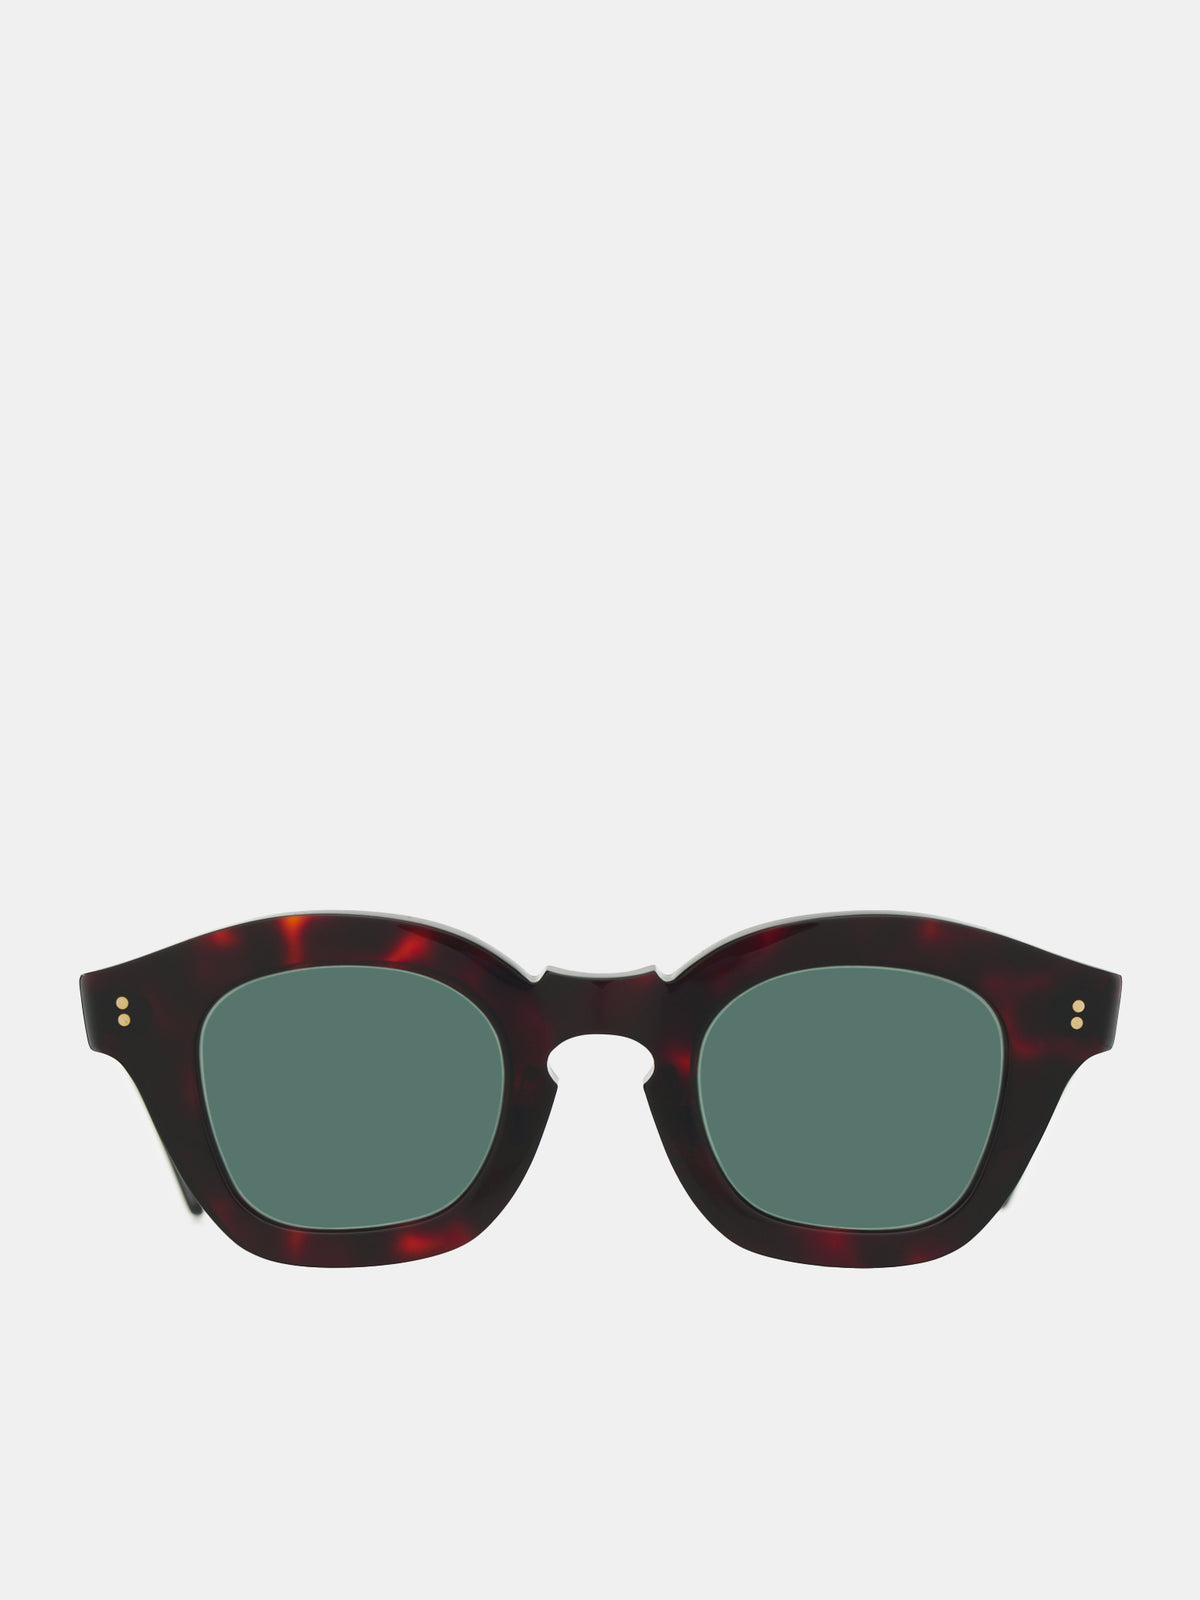 Glam Proto Sunglasses (GLAM-PROTO-TORTSHELL-GRAY4)